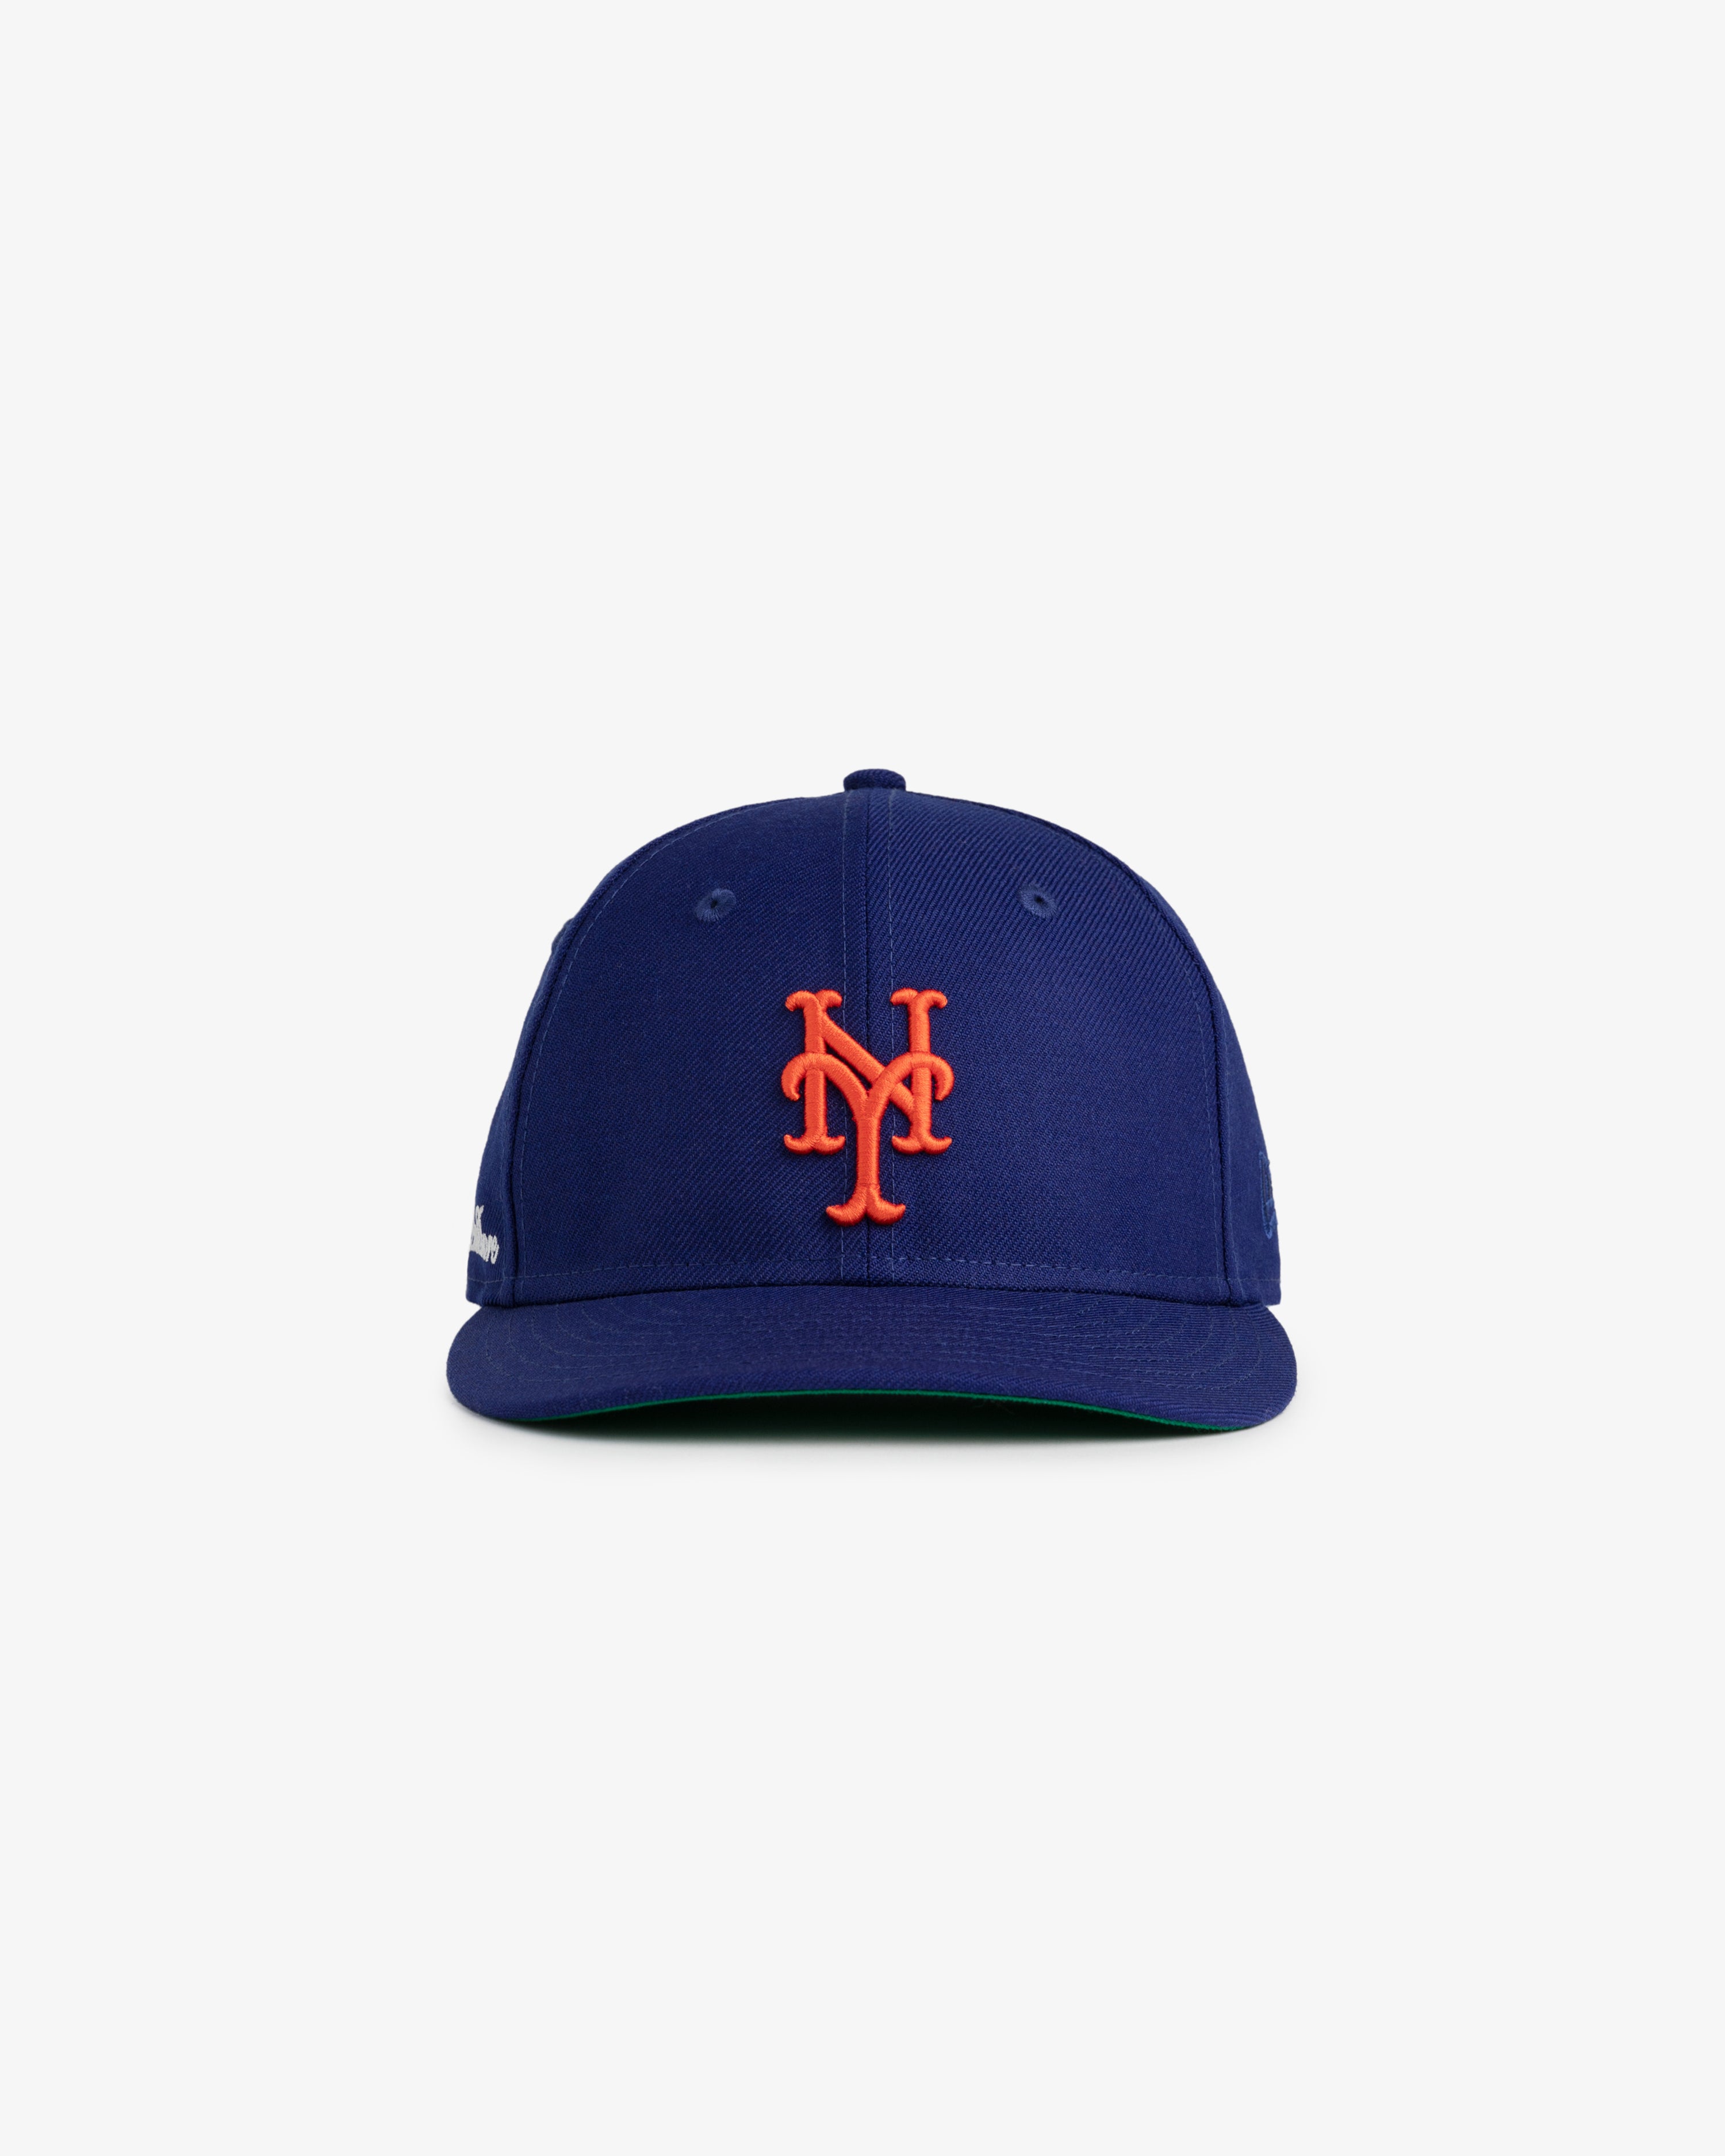 AIME LEON DORE New Era Mets Denim Hat